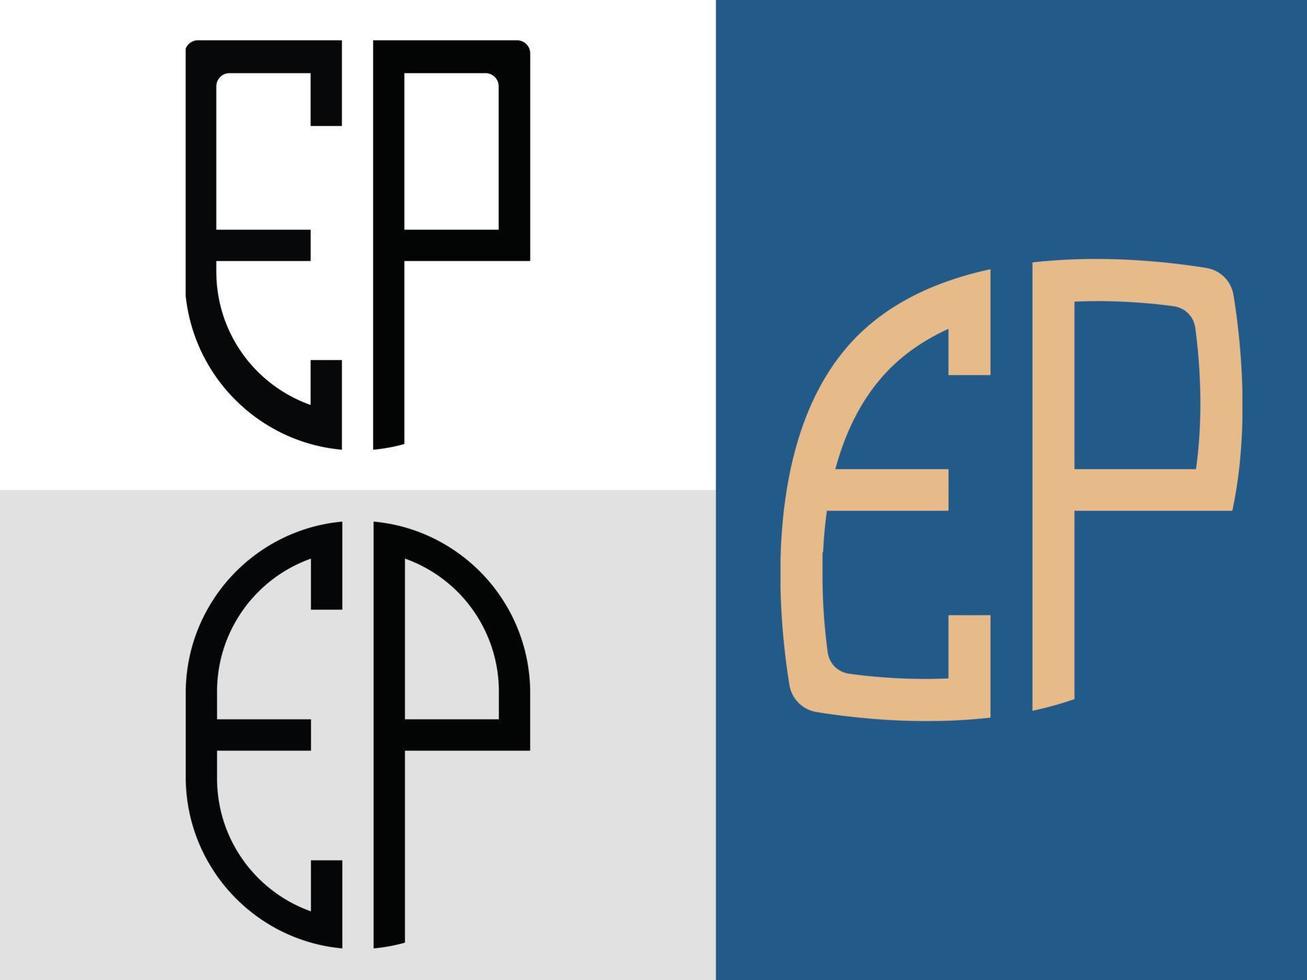 kreative anfangsbuchstaben ep-logo-designs paket. vektor